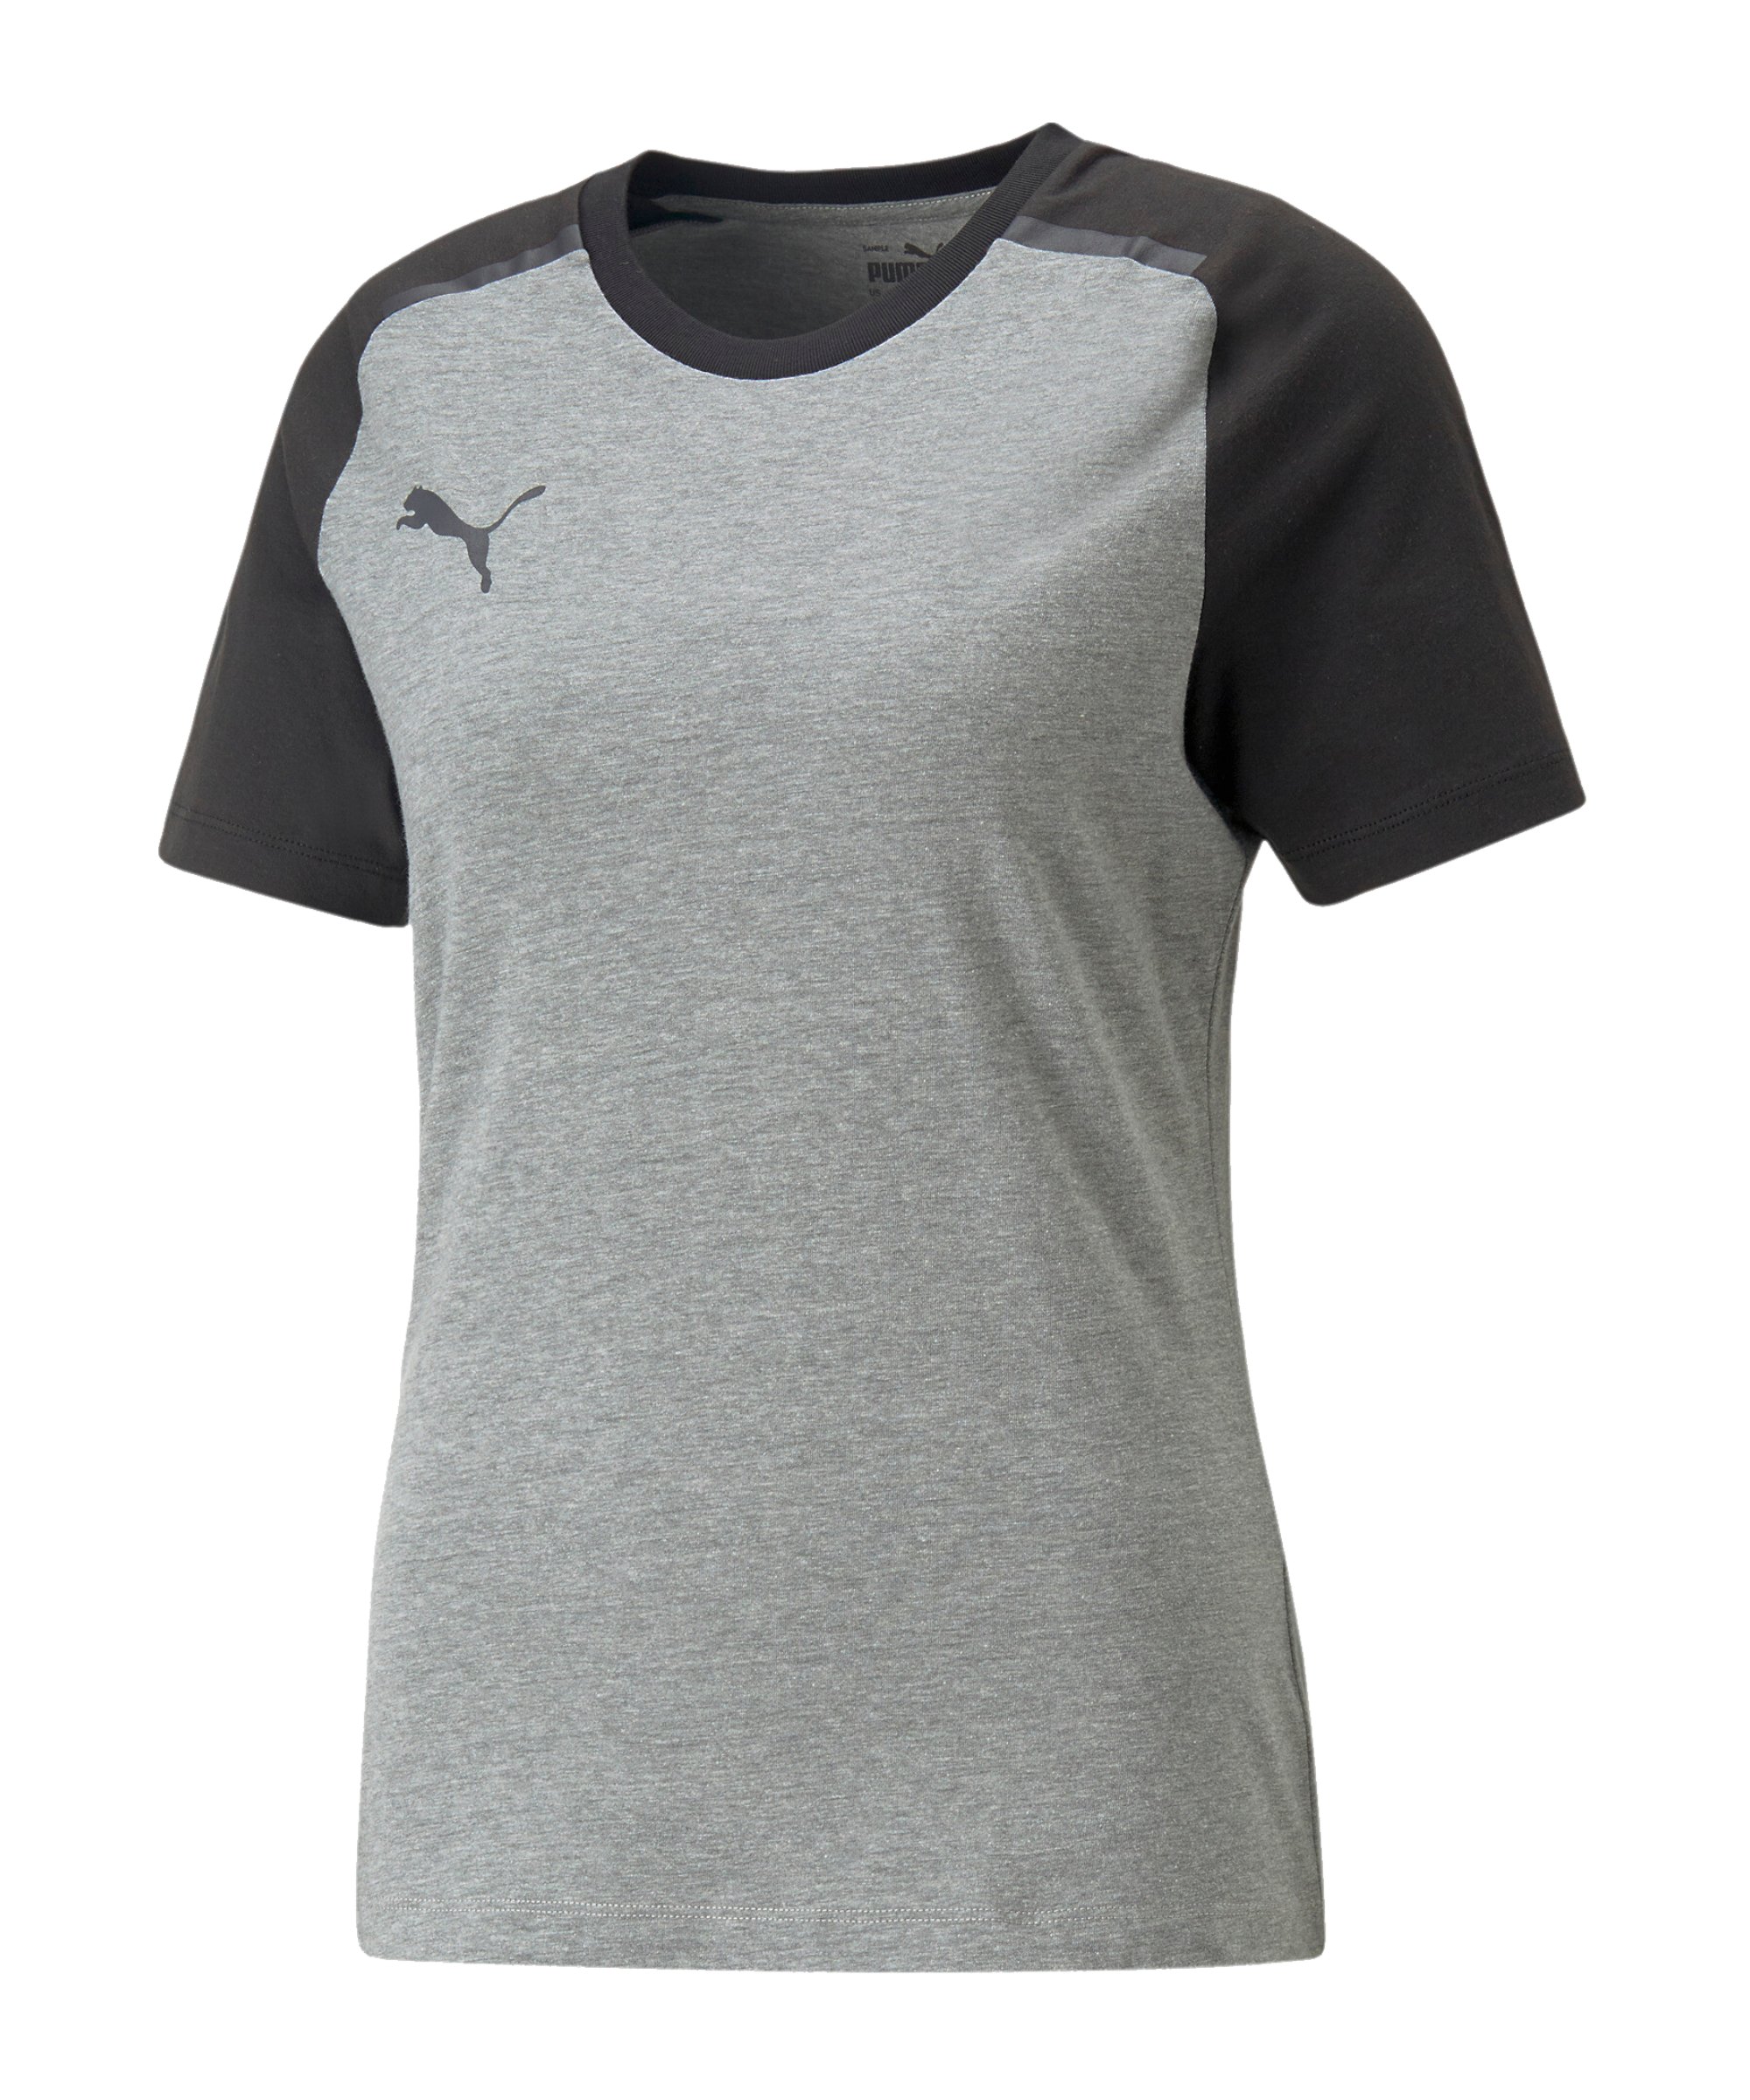 Casuals Grau grau F013 T-Shirt Damen teamCUP PUMA